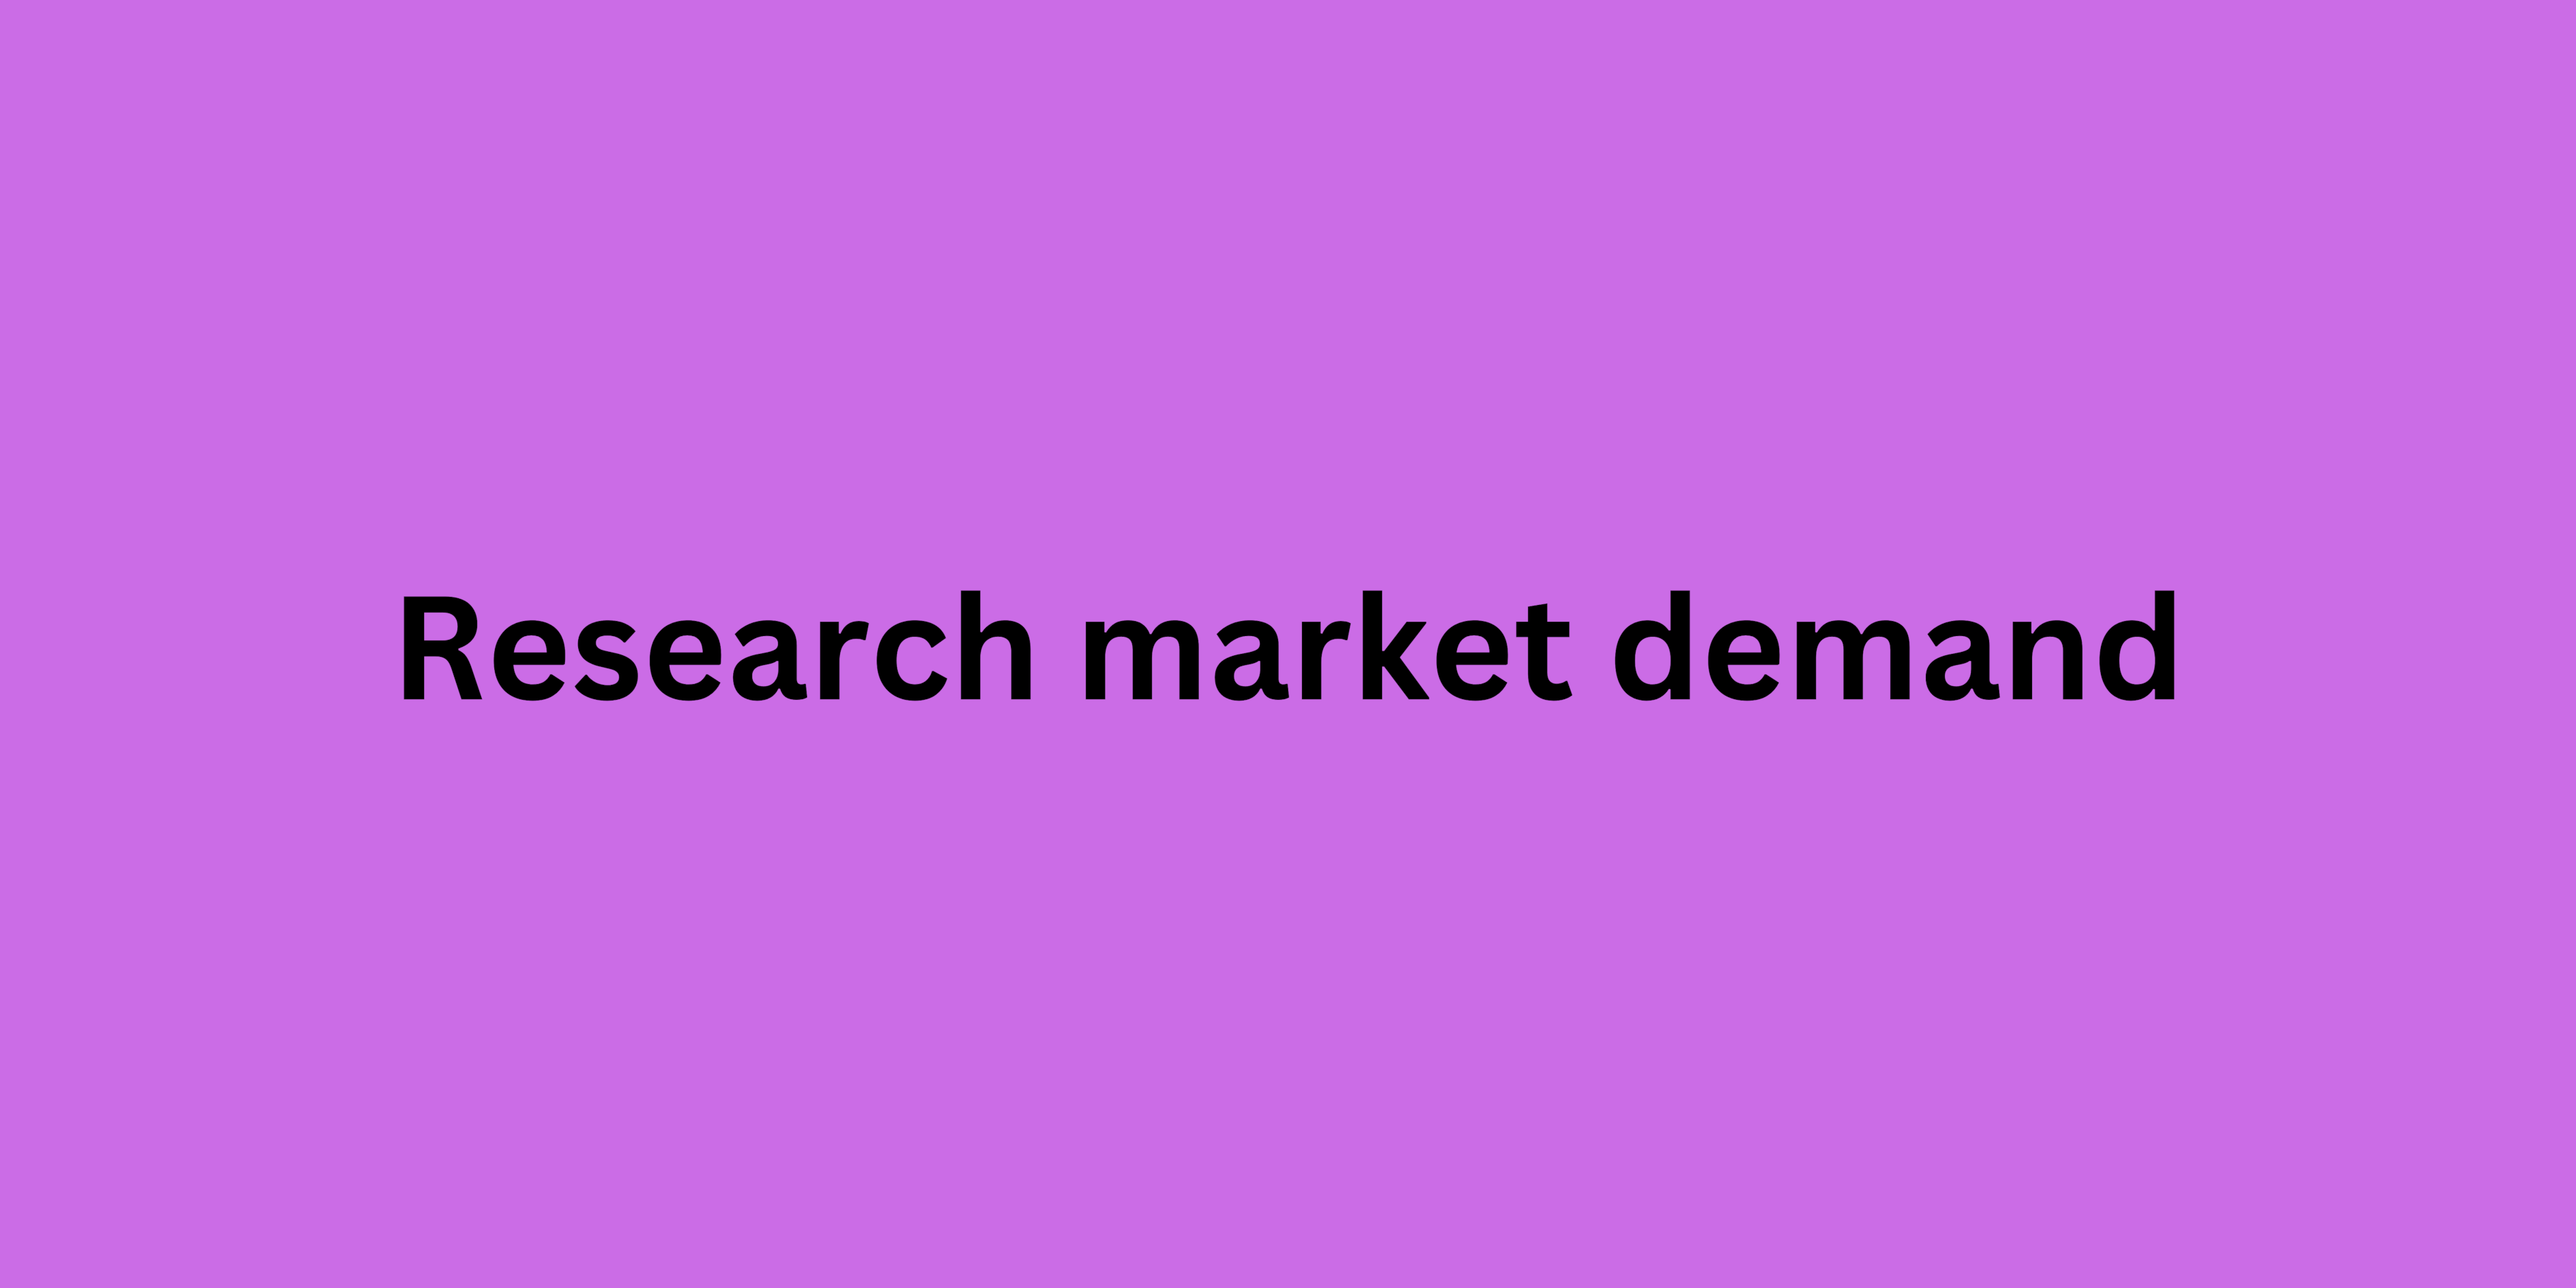 Research market demand